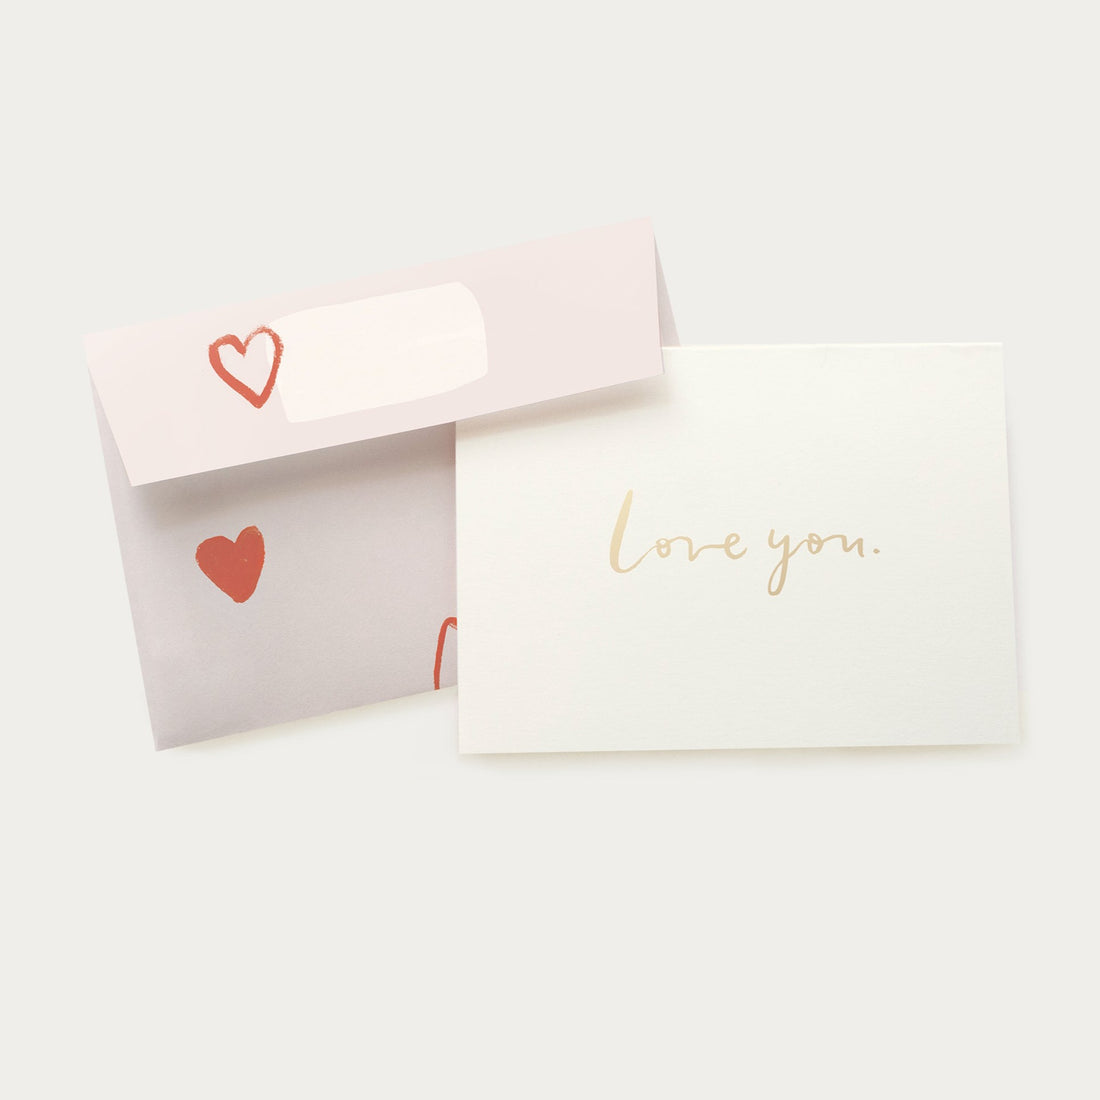 Hearts Love You Card